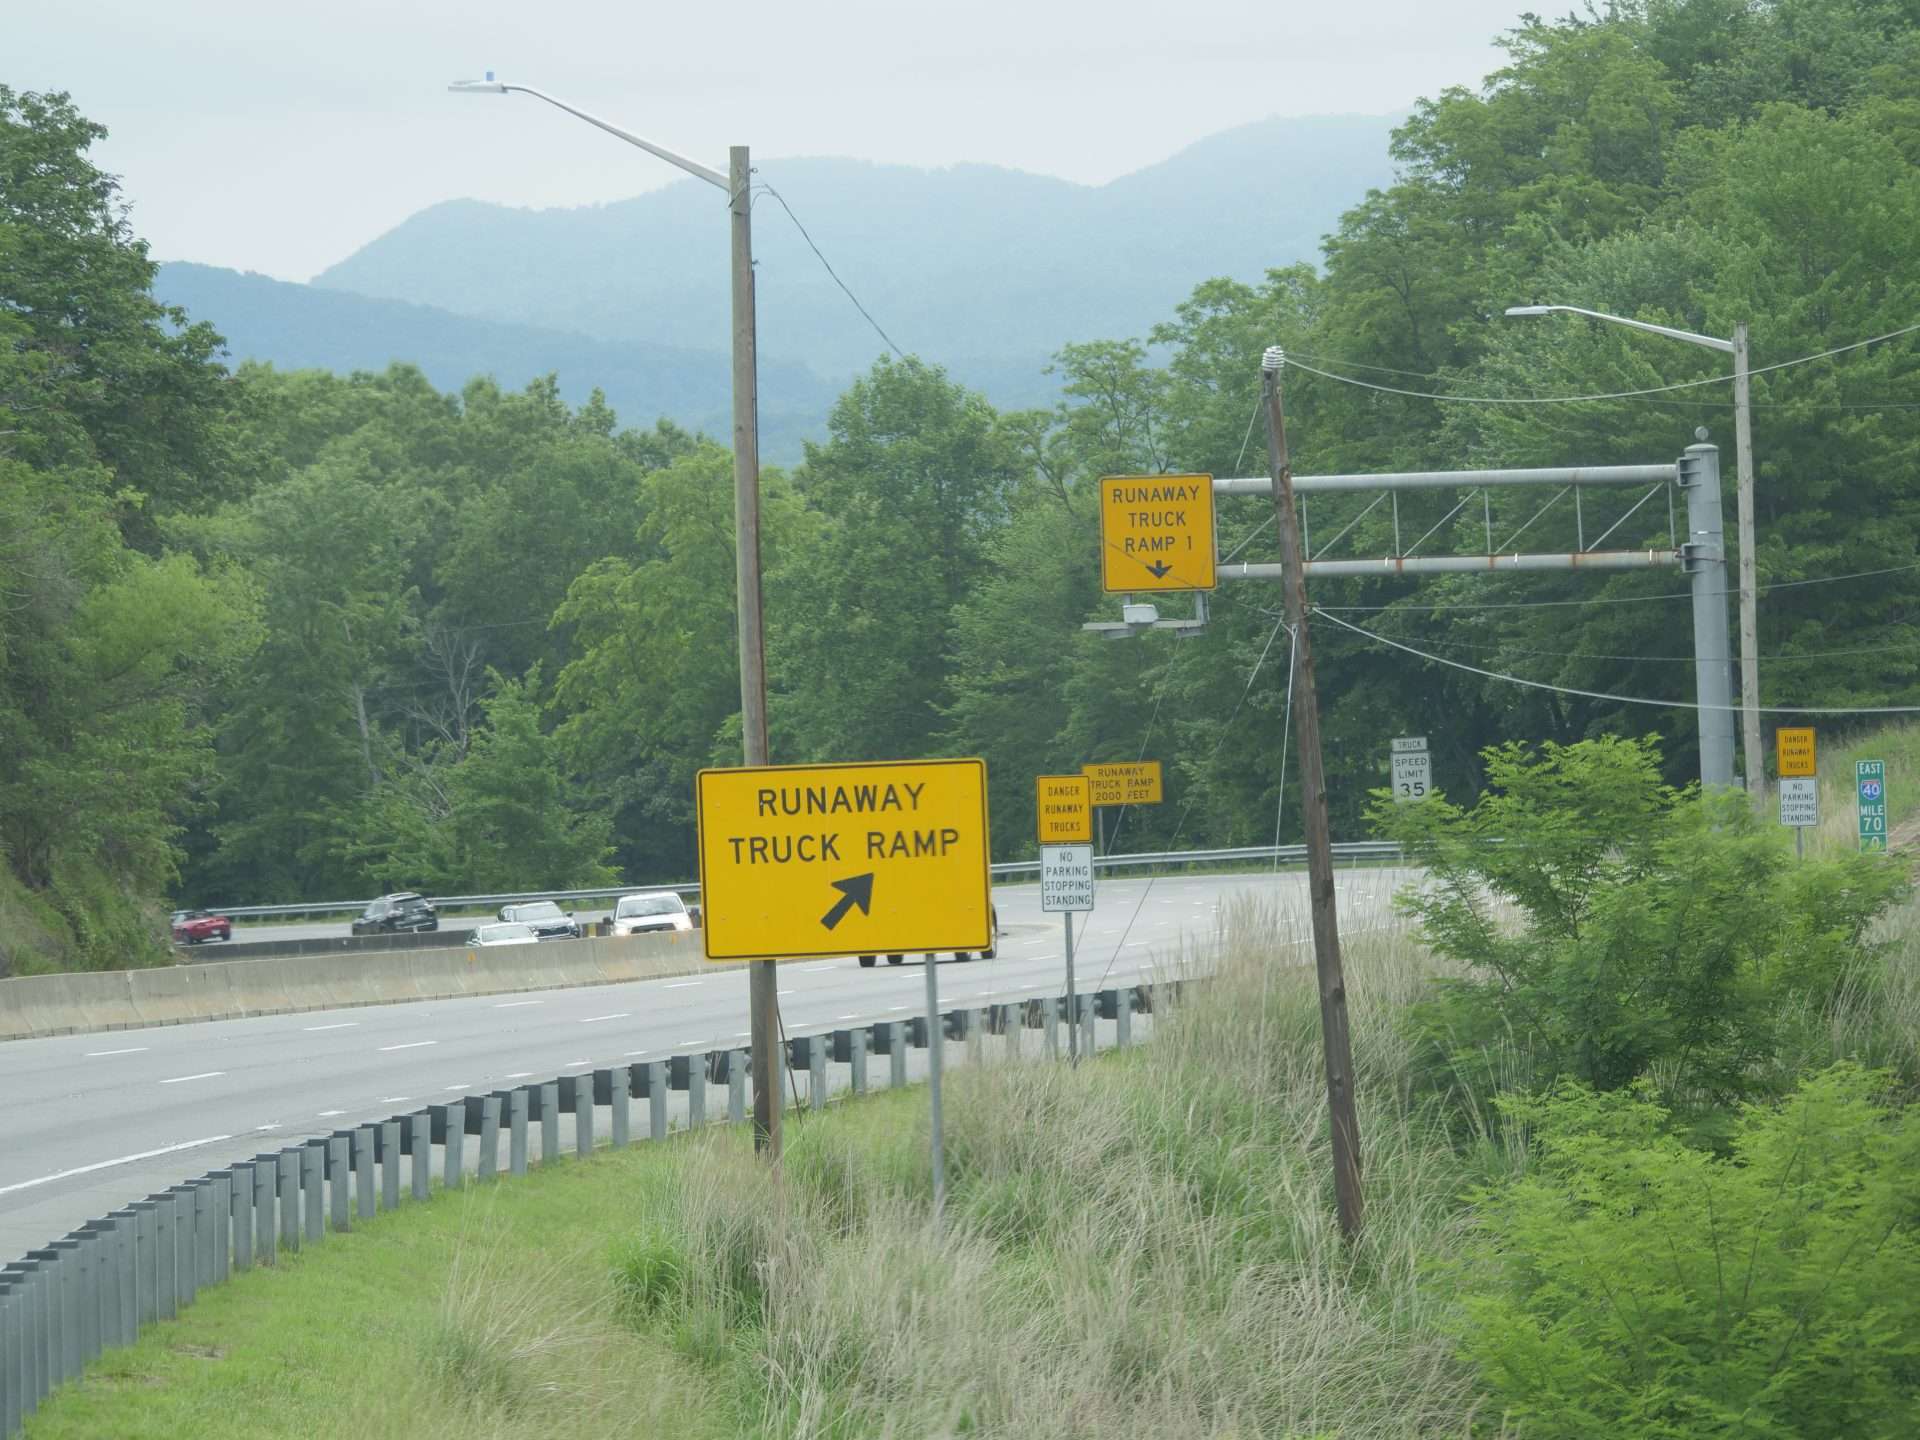 Runaway truck ramp sign on downhill highway